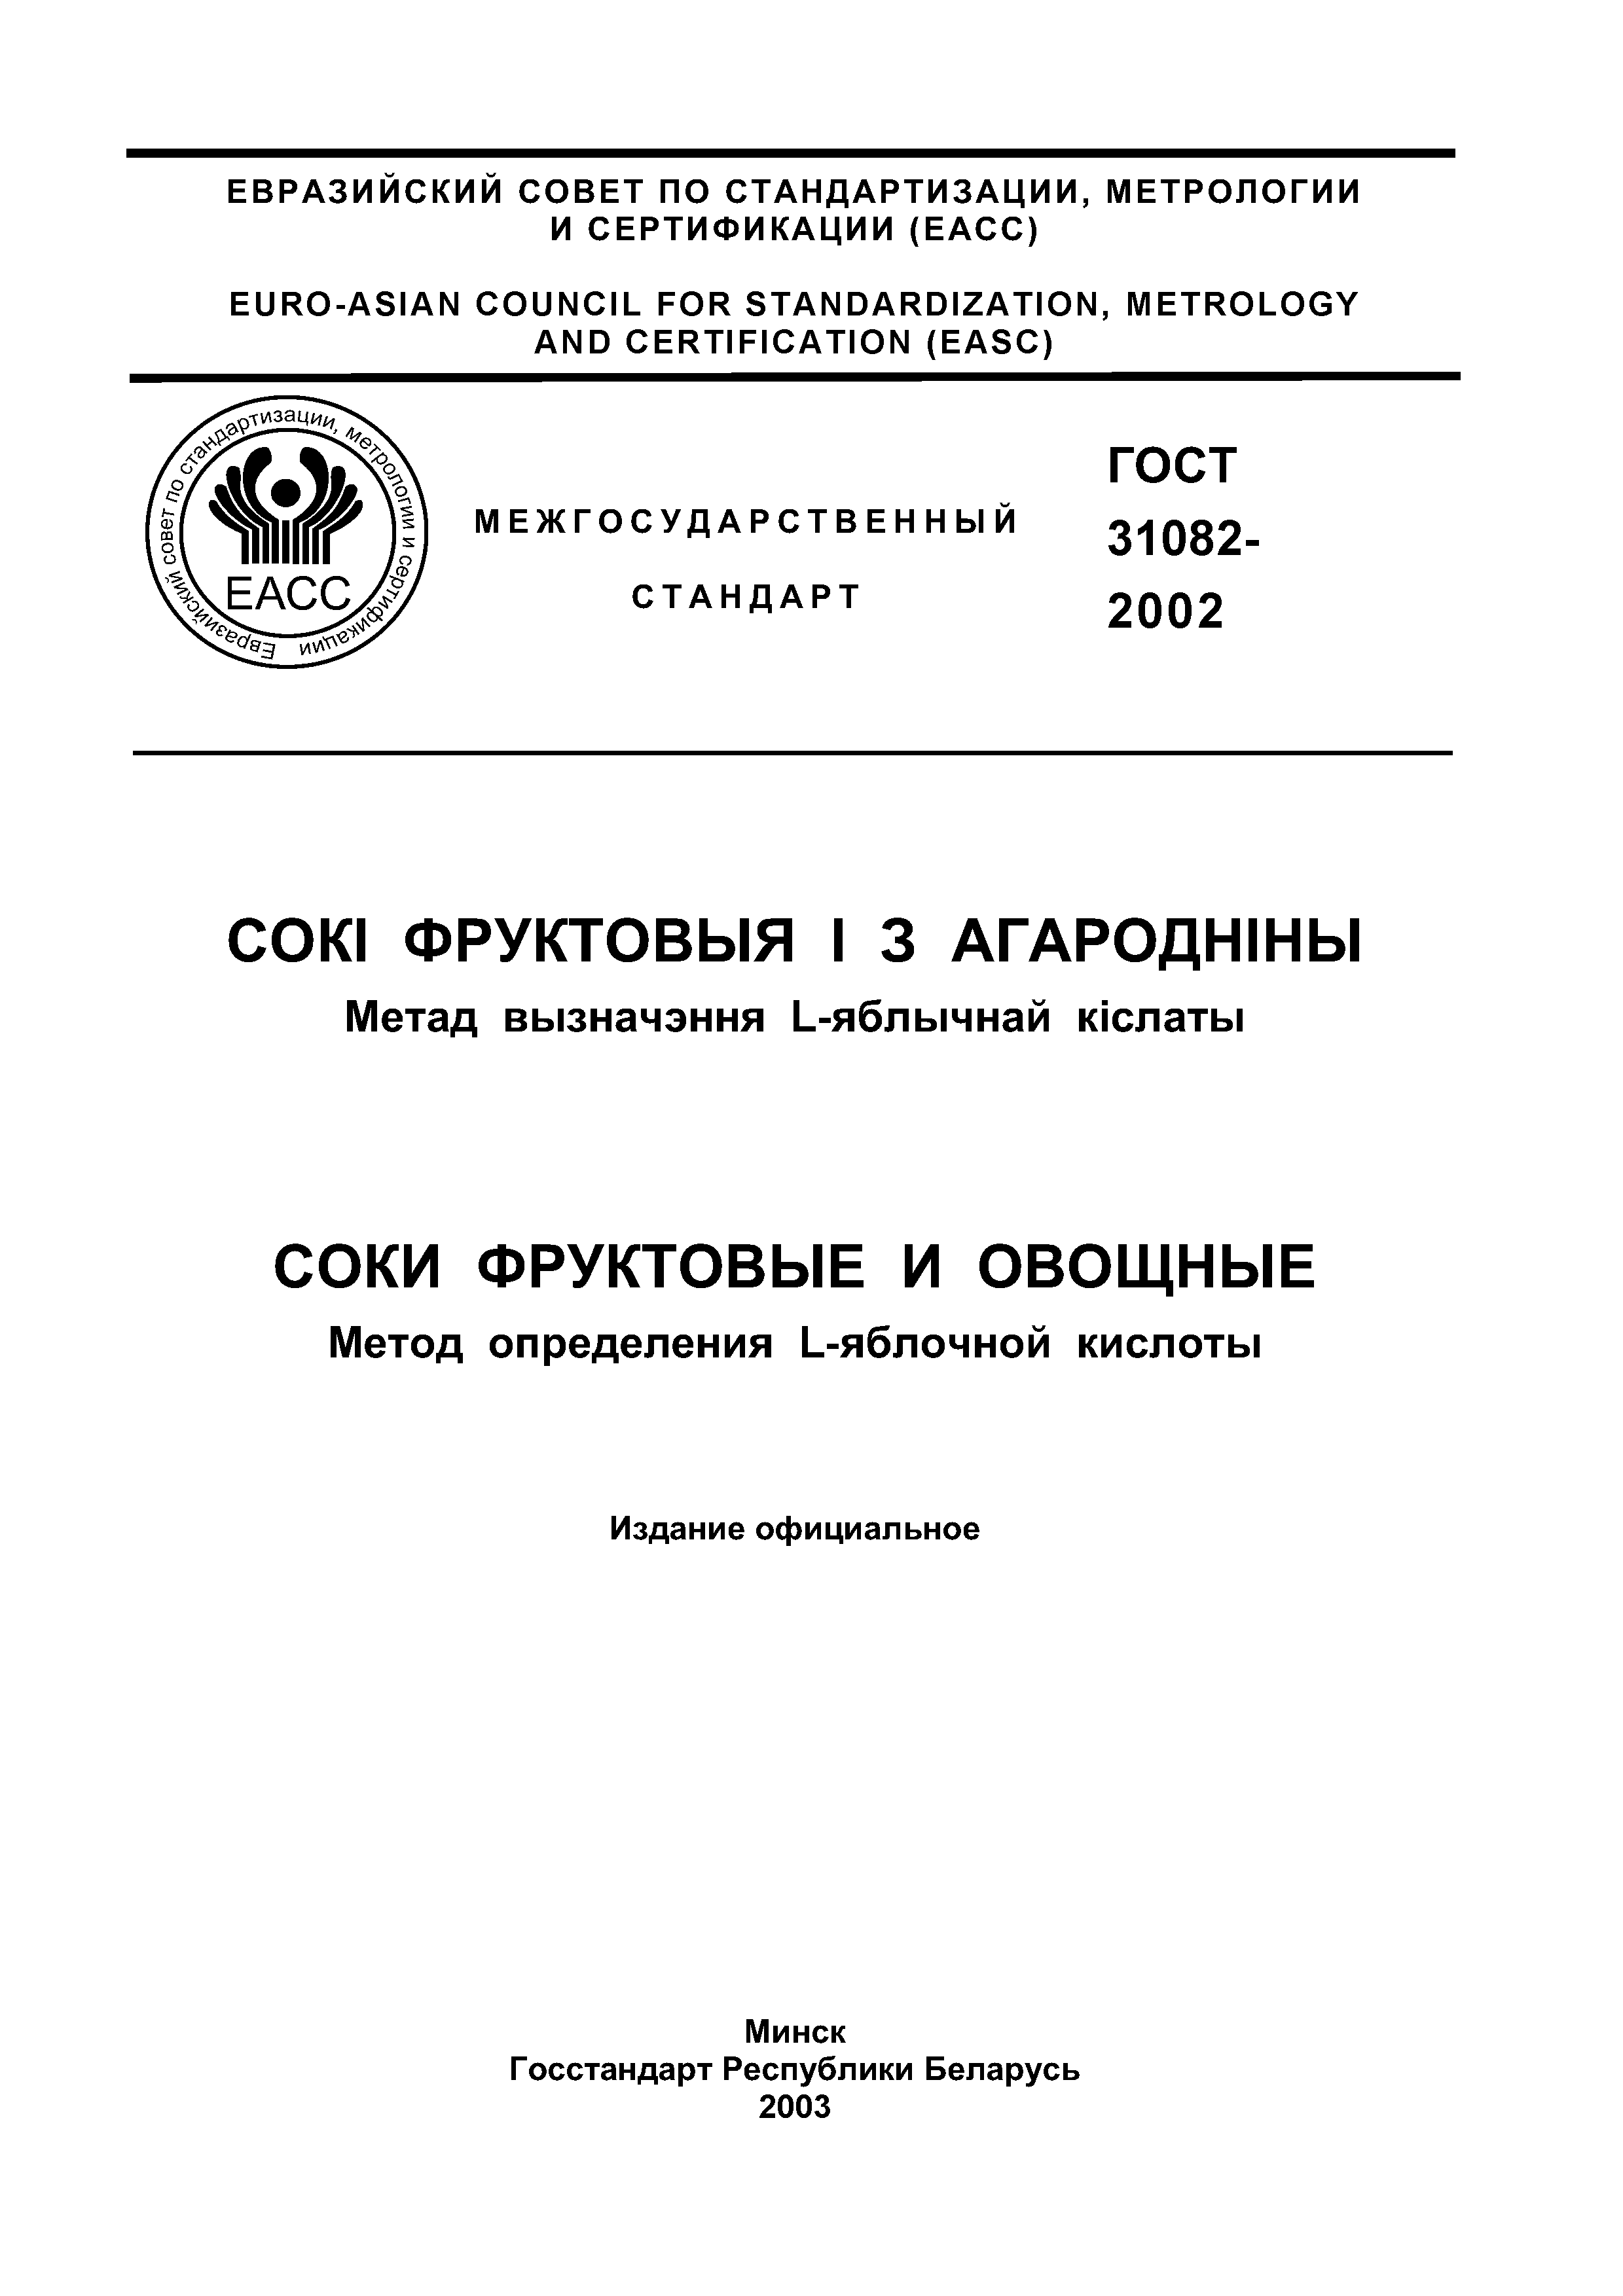 ГОСТ 31082-2002